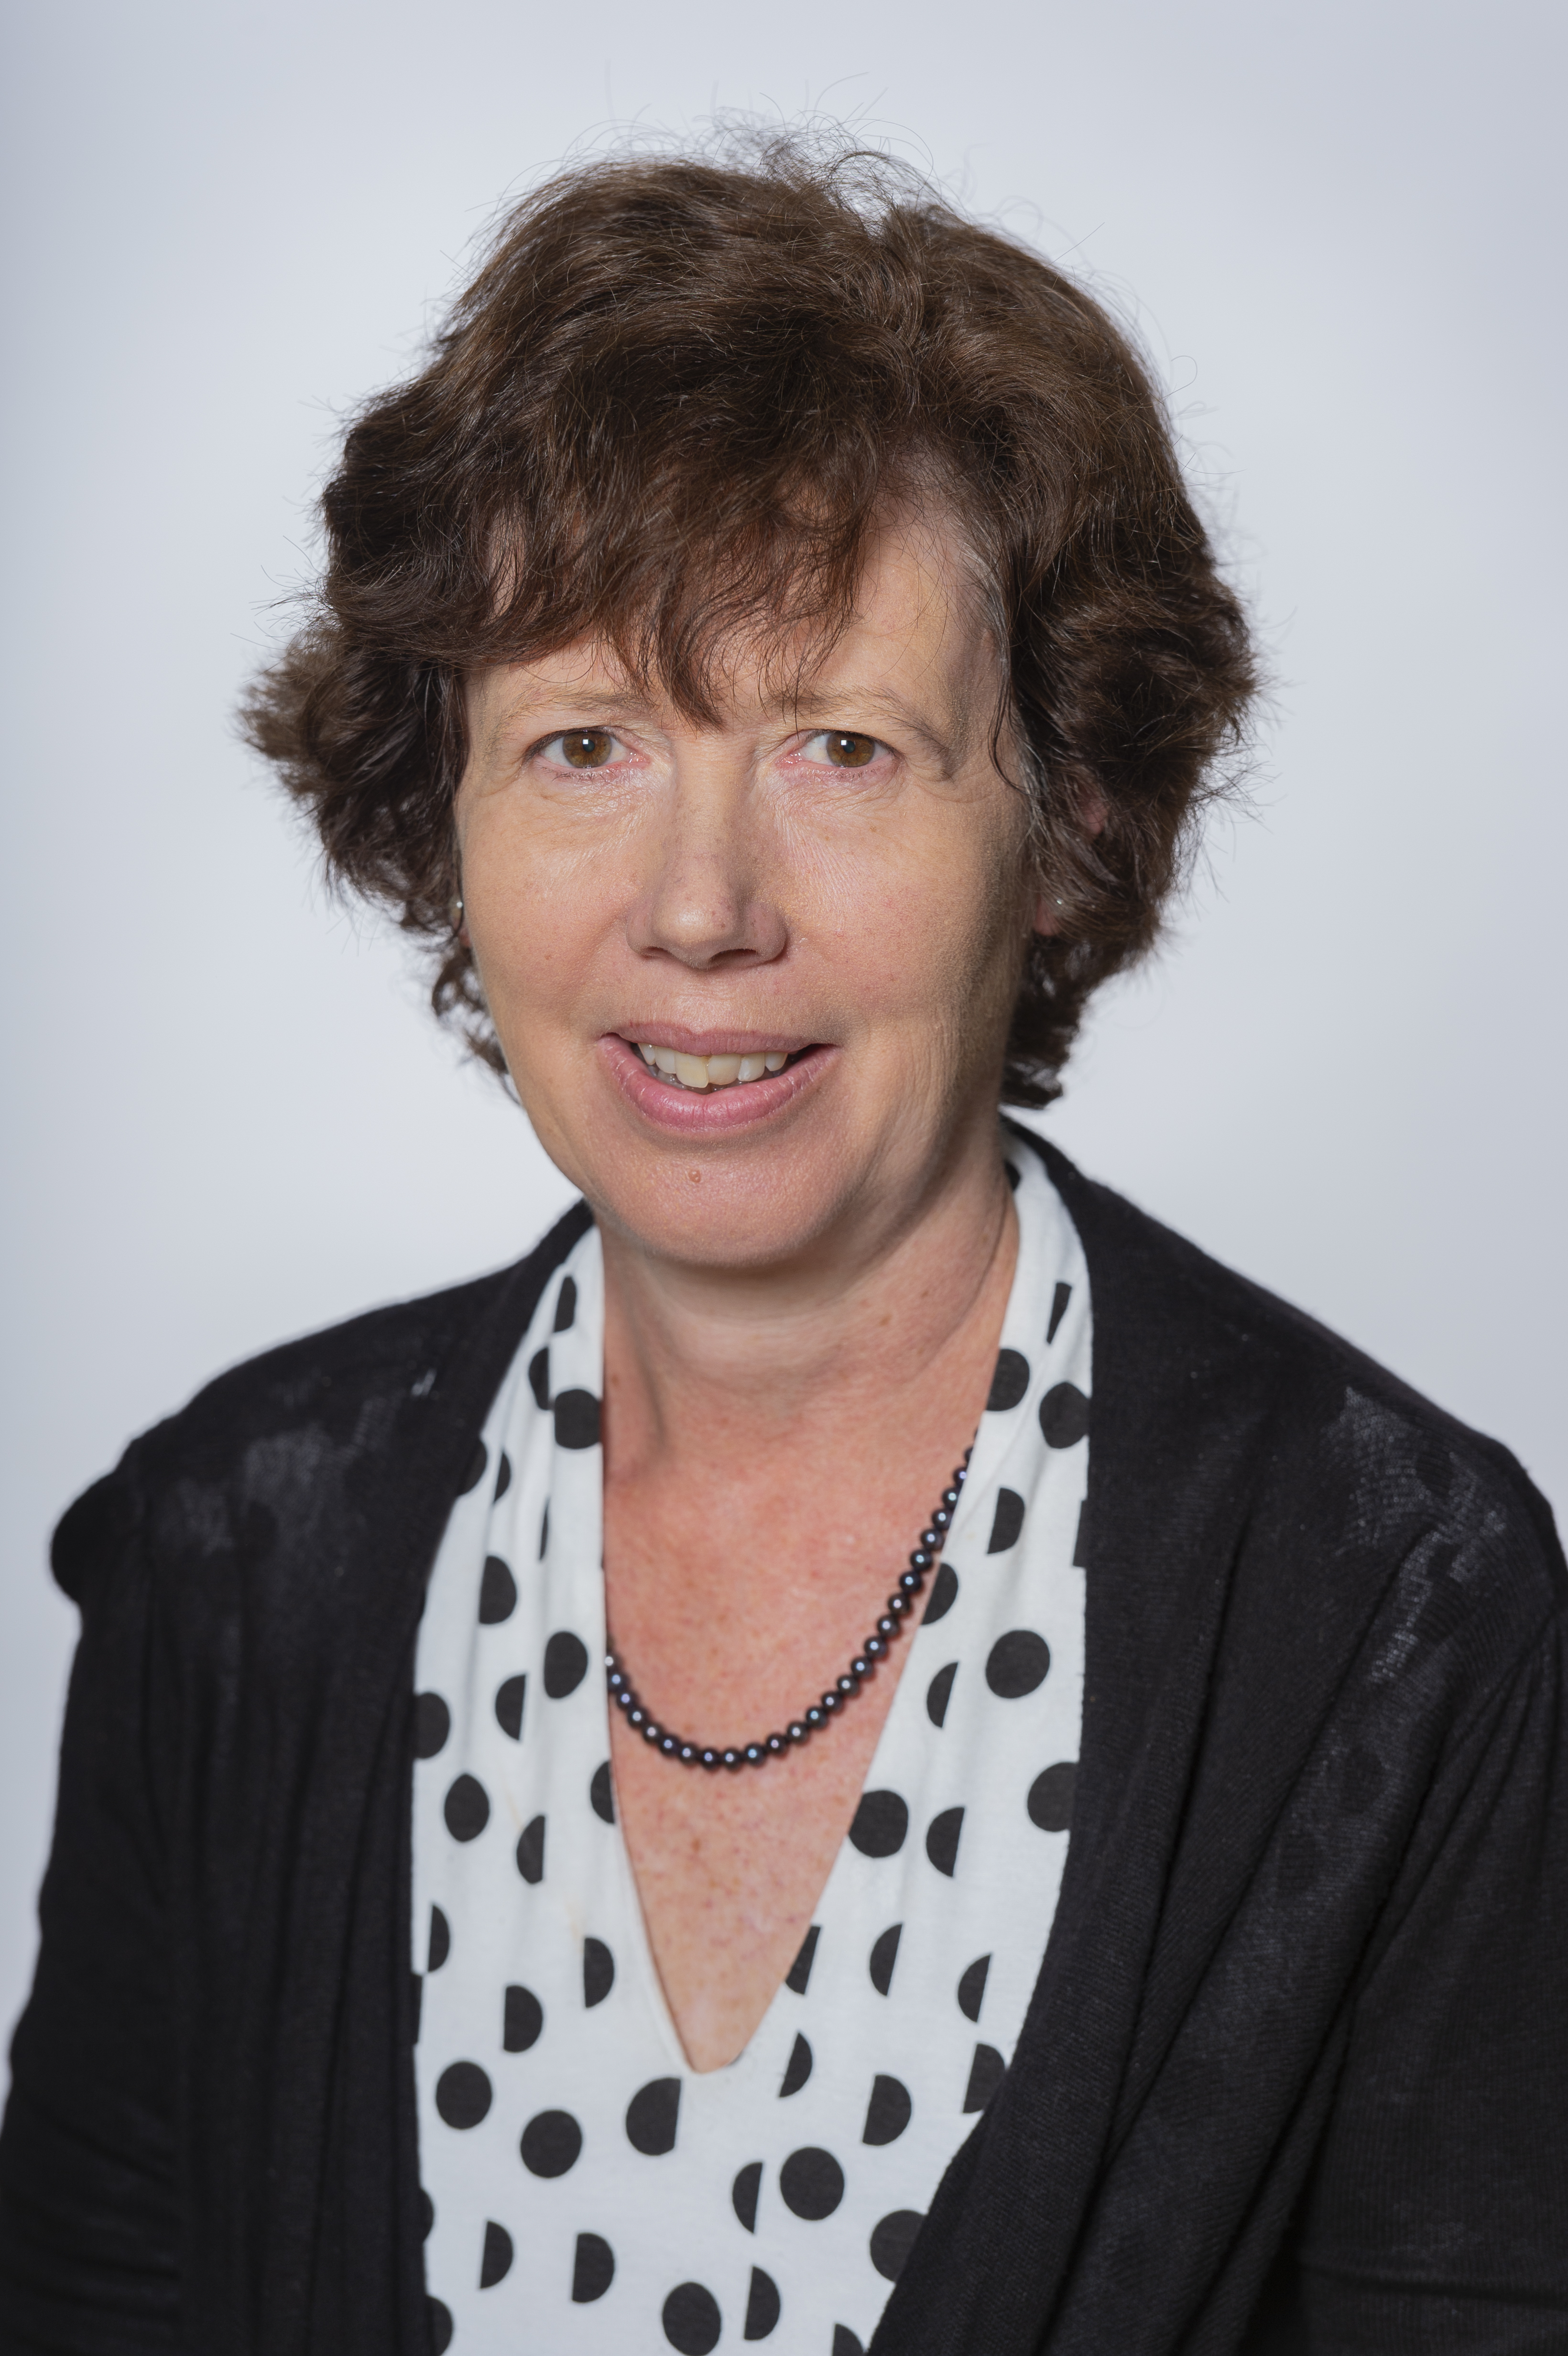 Councillor Diane White, Portfolio Holder for Children's Services including Education